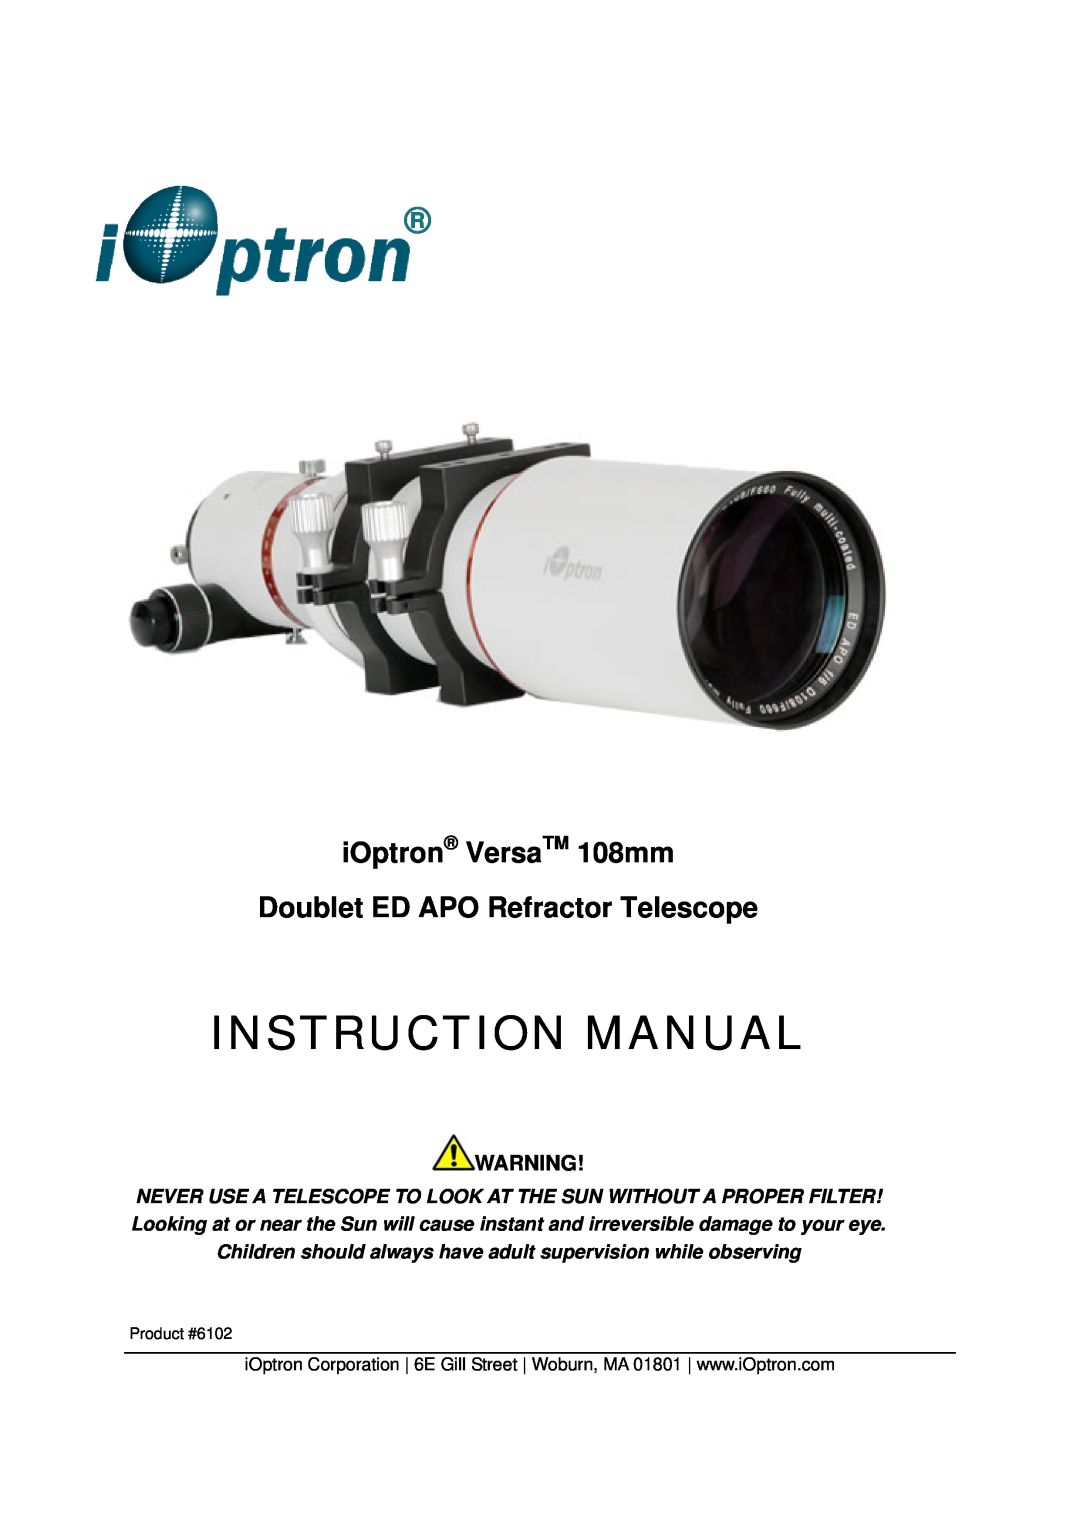 iOptron 6102 instruction manual Instruction Manual, iOptron VersaTM 108mm Doublet ED APO Refractor Telescope 